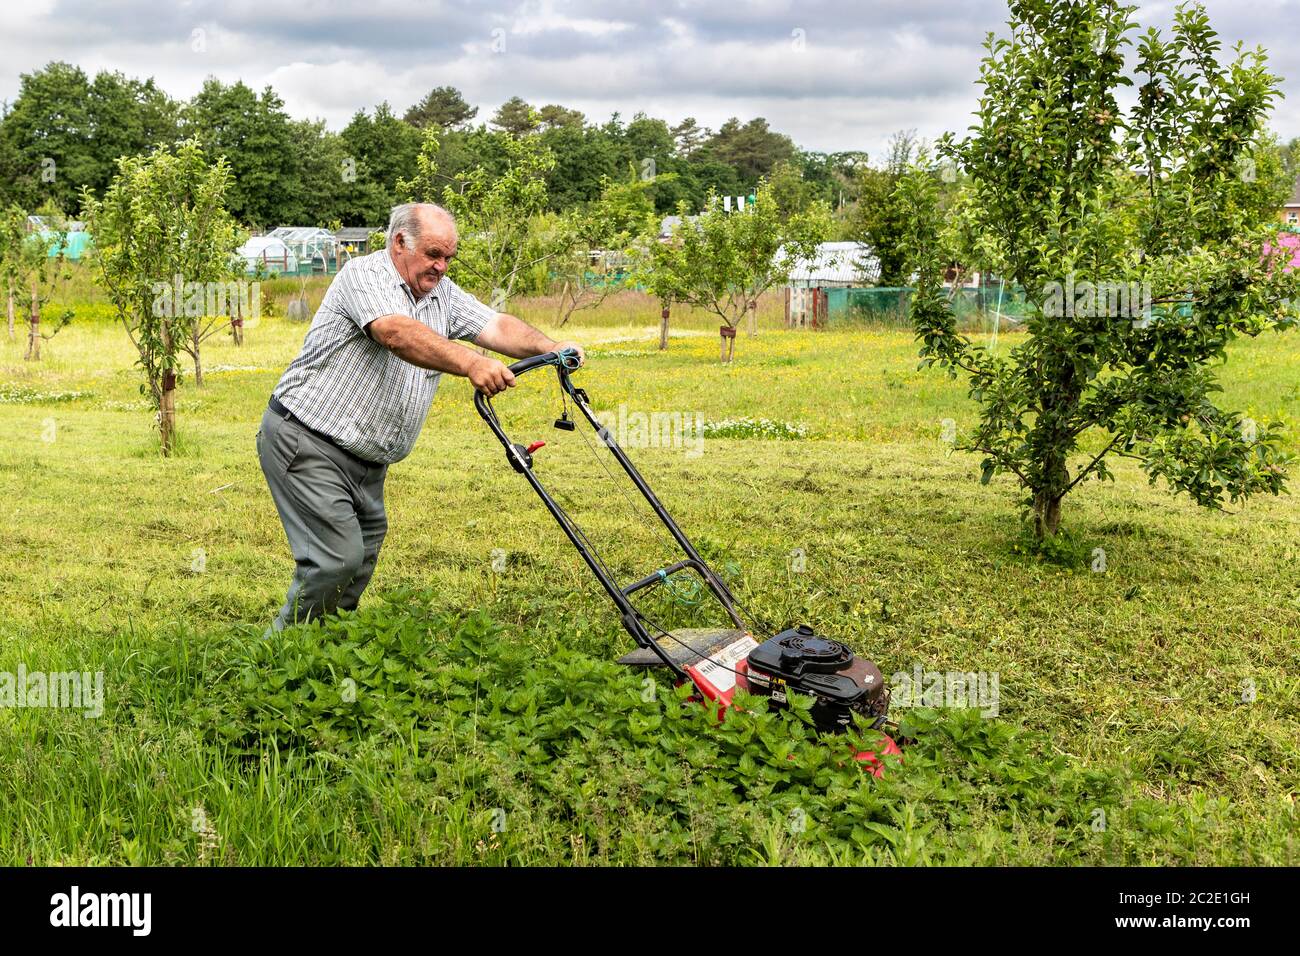 Cutting the grass at an apple orchard using a petrol driven lawnmower, Eglinton Growers allotments, Kilwinning, Ayrshire, Scotland, UK Stock Photo